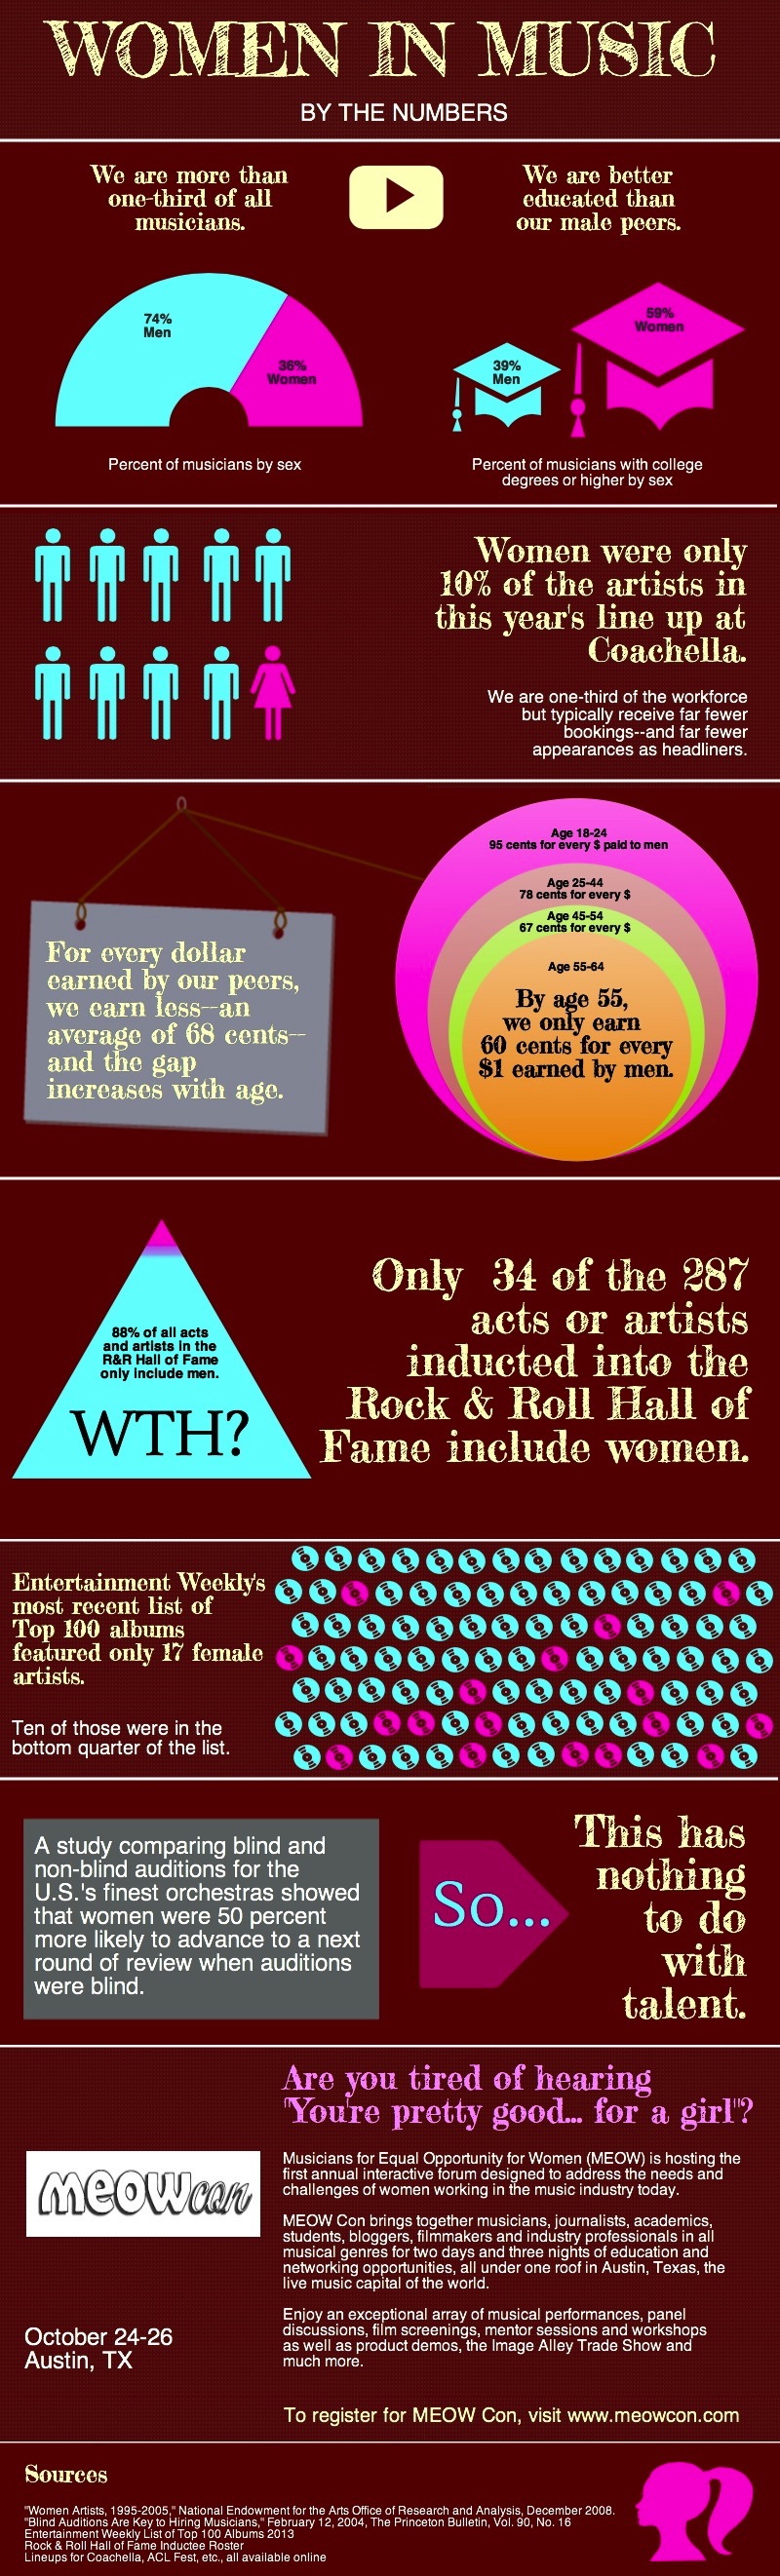 Women-In-Music-Infographic-6